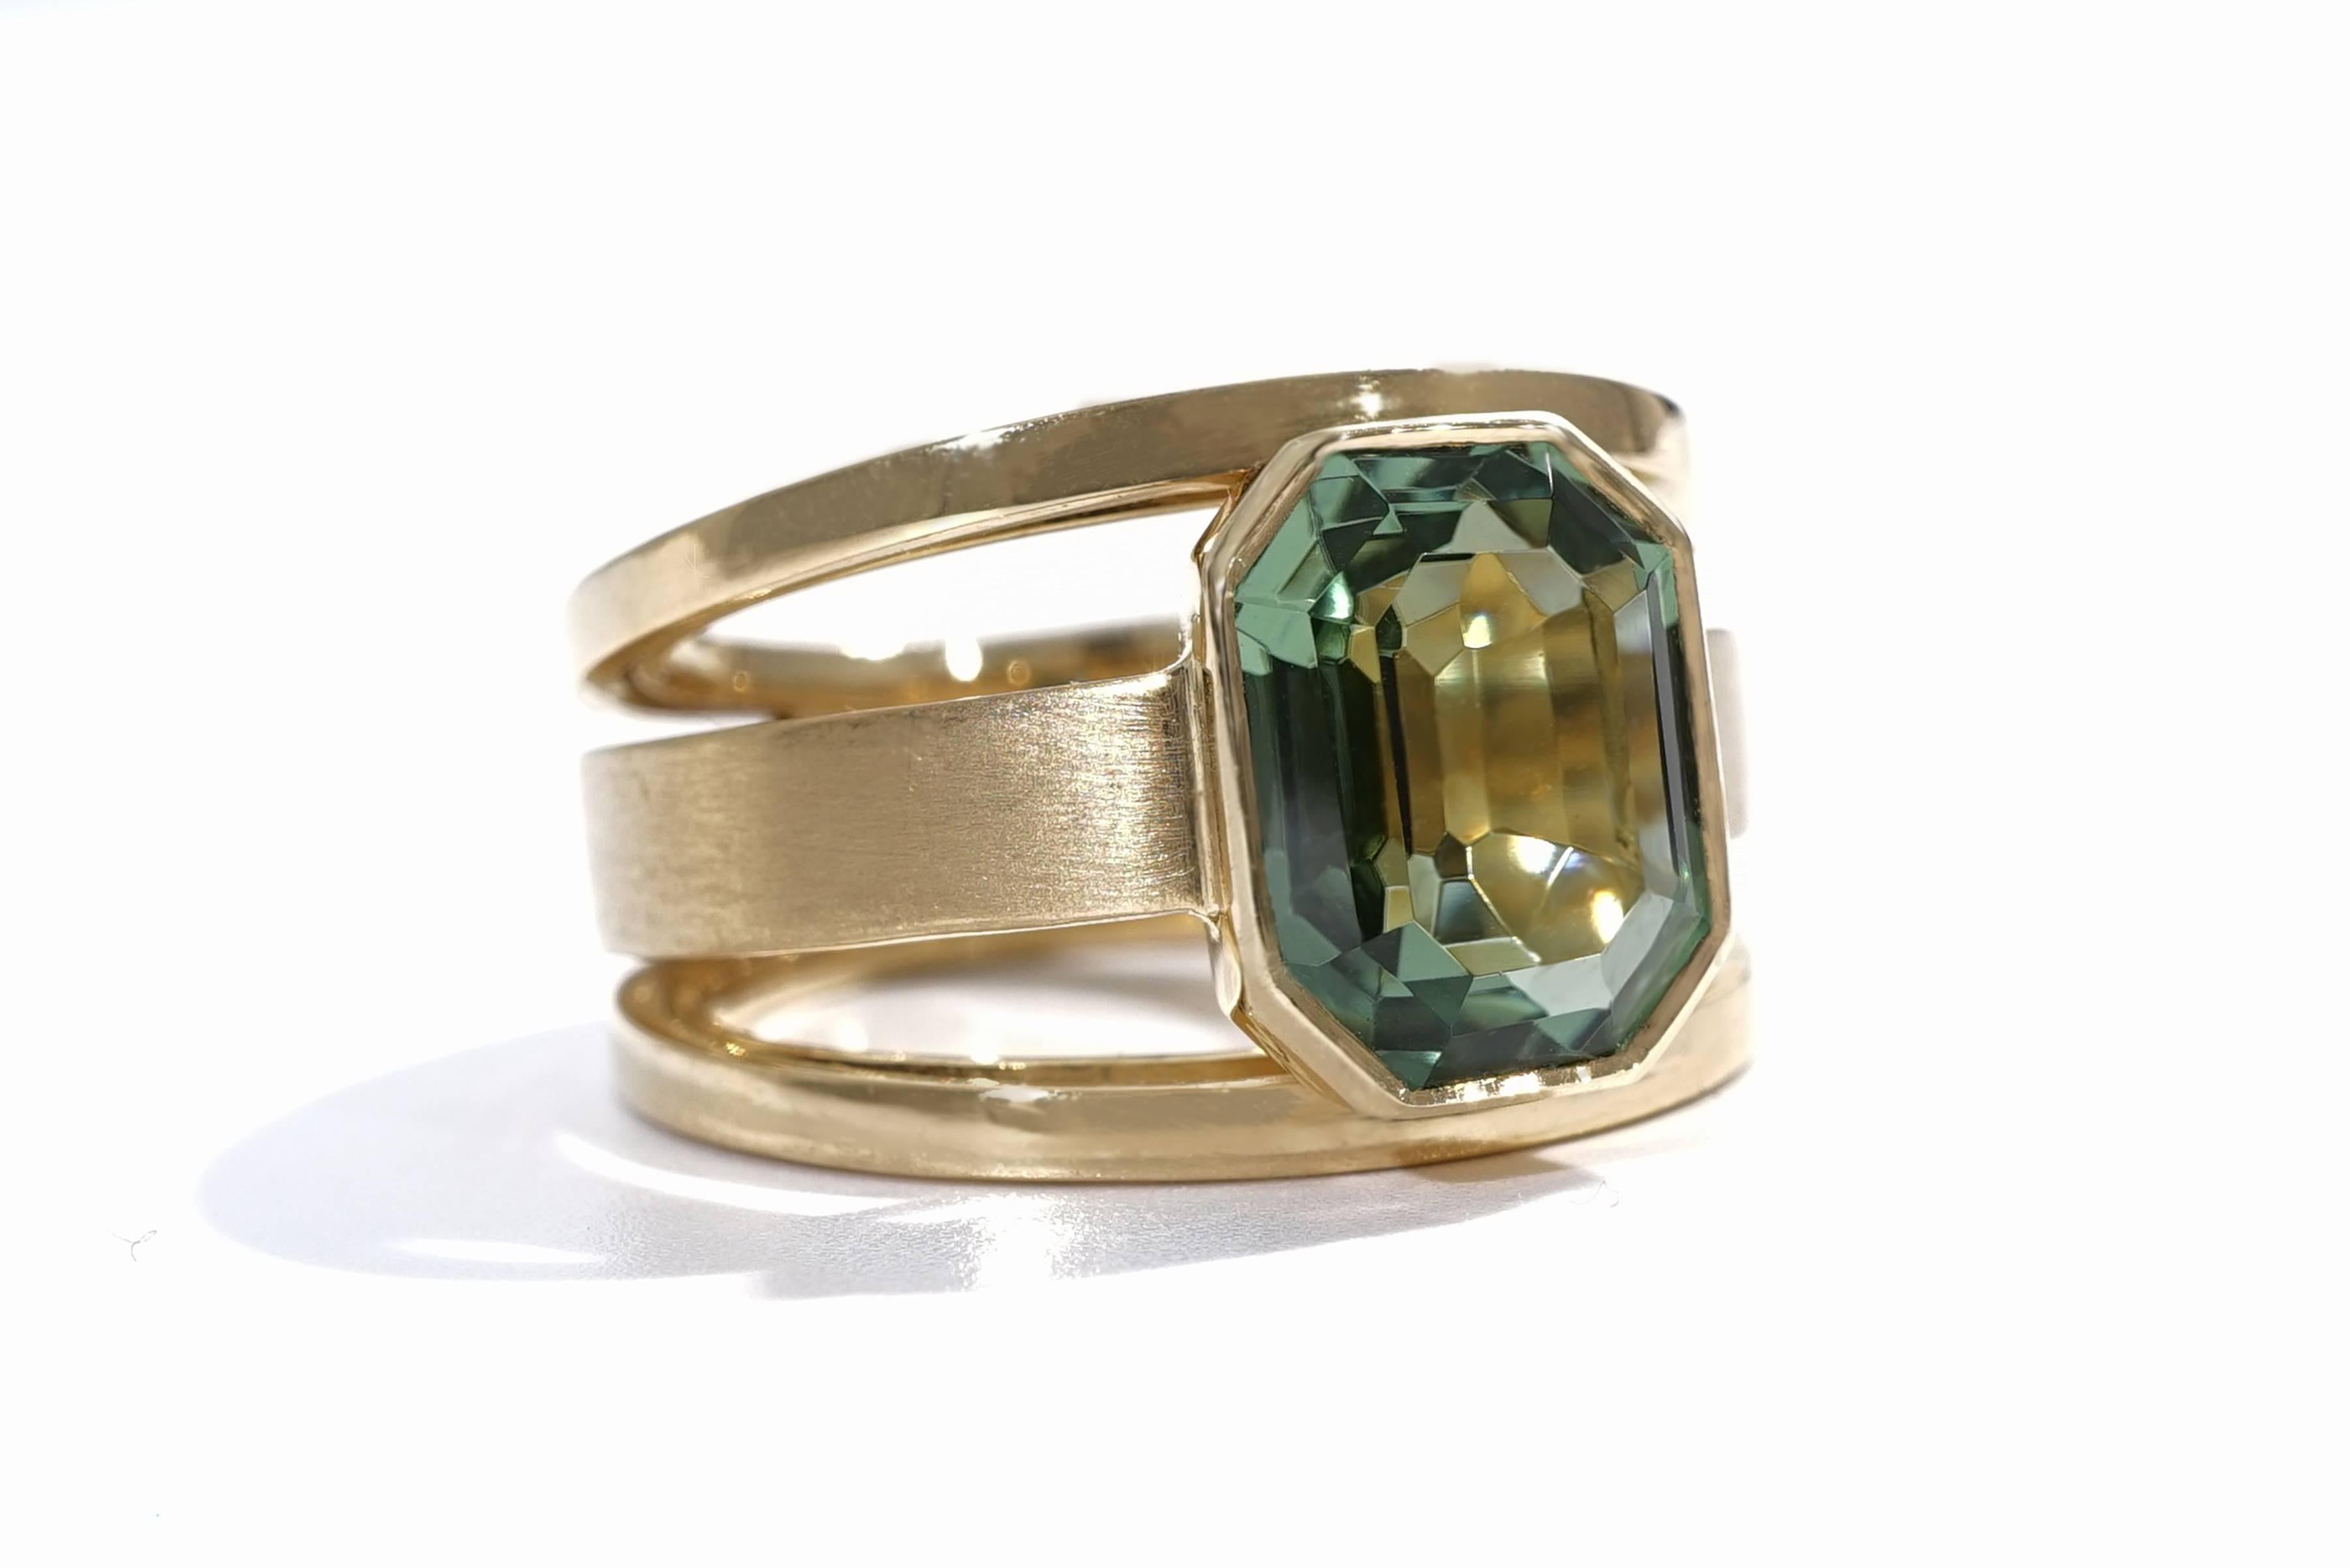 Emerald Cut Coralie Van Caloen 18 Carat Yellow Gold Green Tourmaline Band Ring For Sale